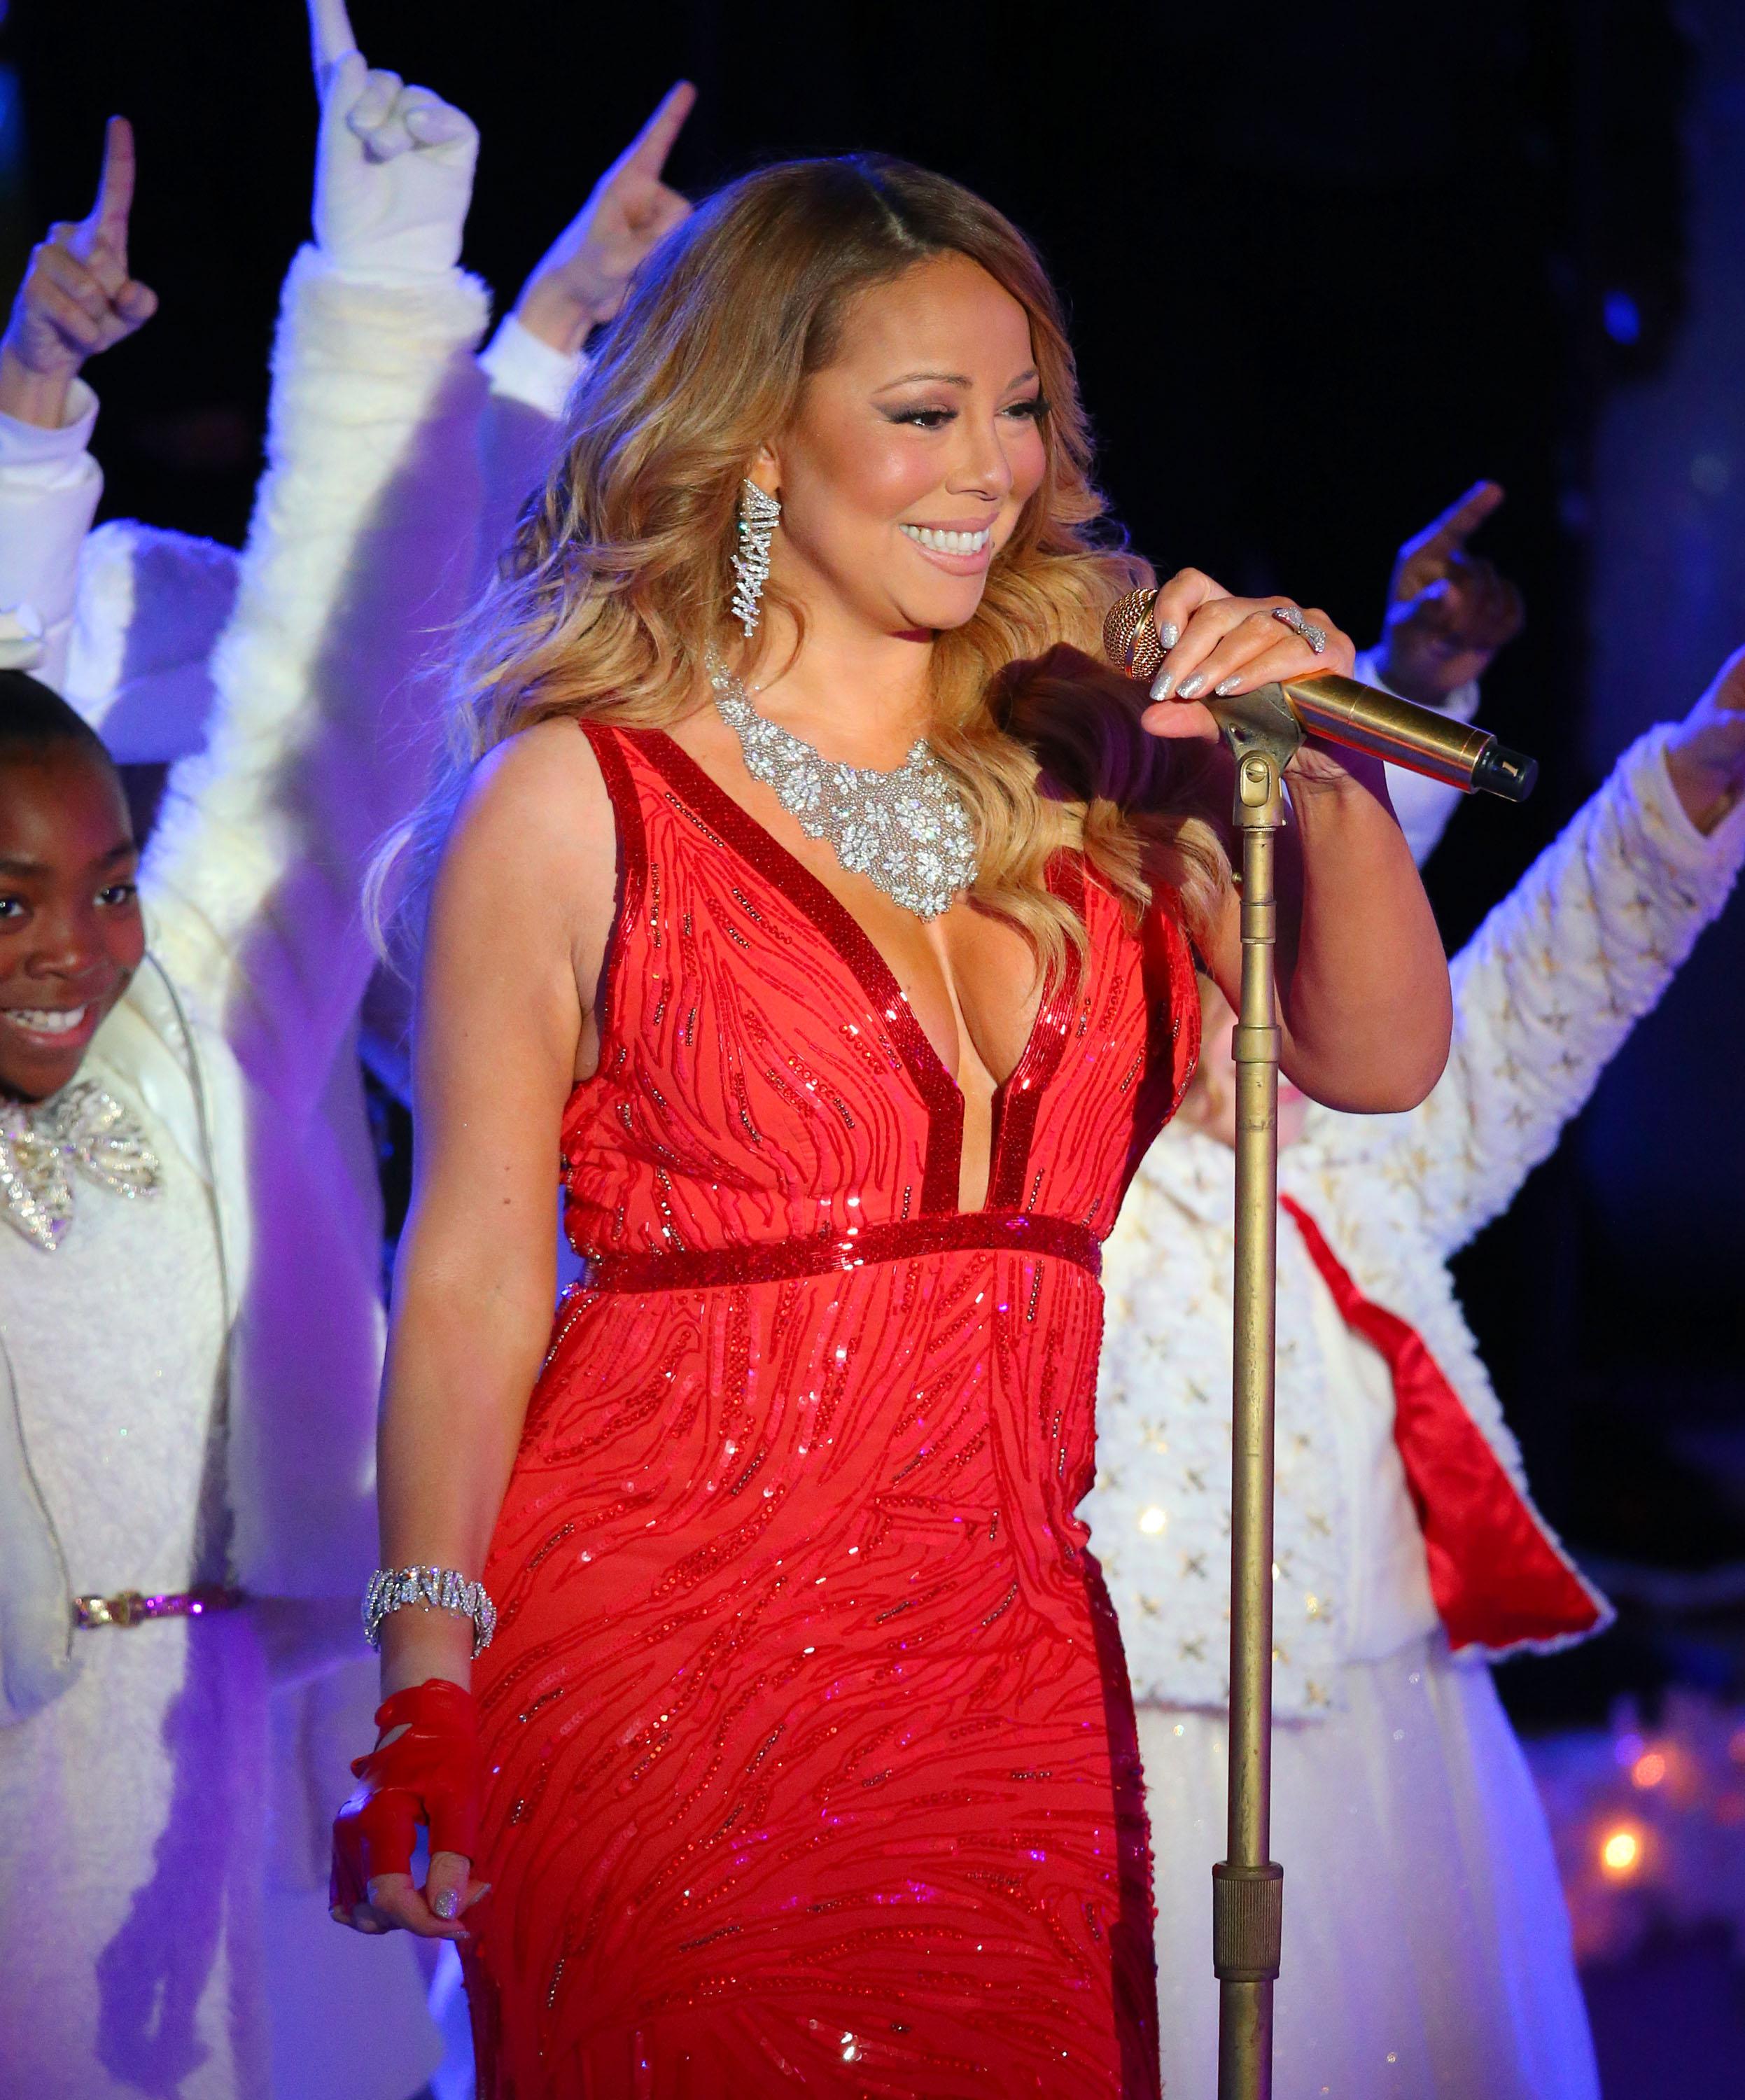 Mariah Carey looks ravishing in red at the Rockefeller Center Christmas Tree lighting event